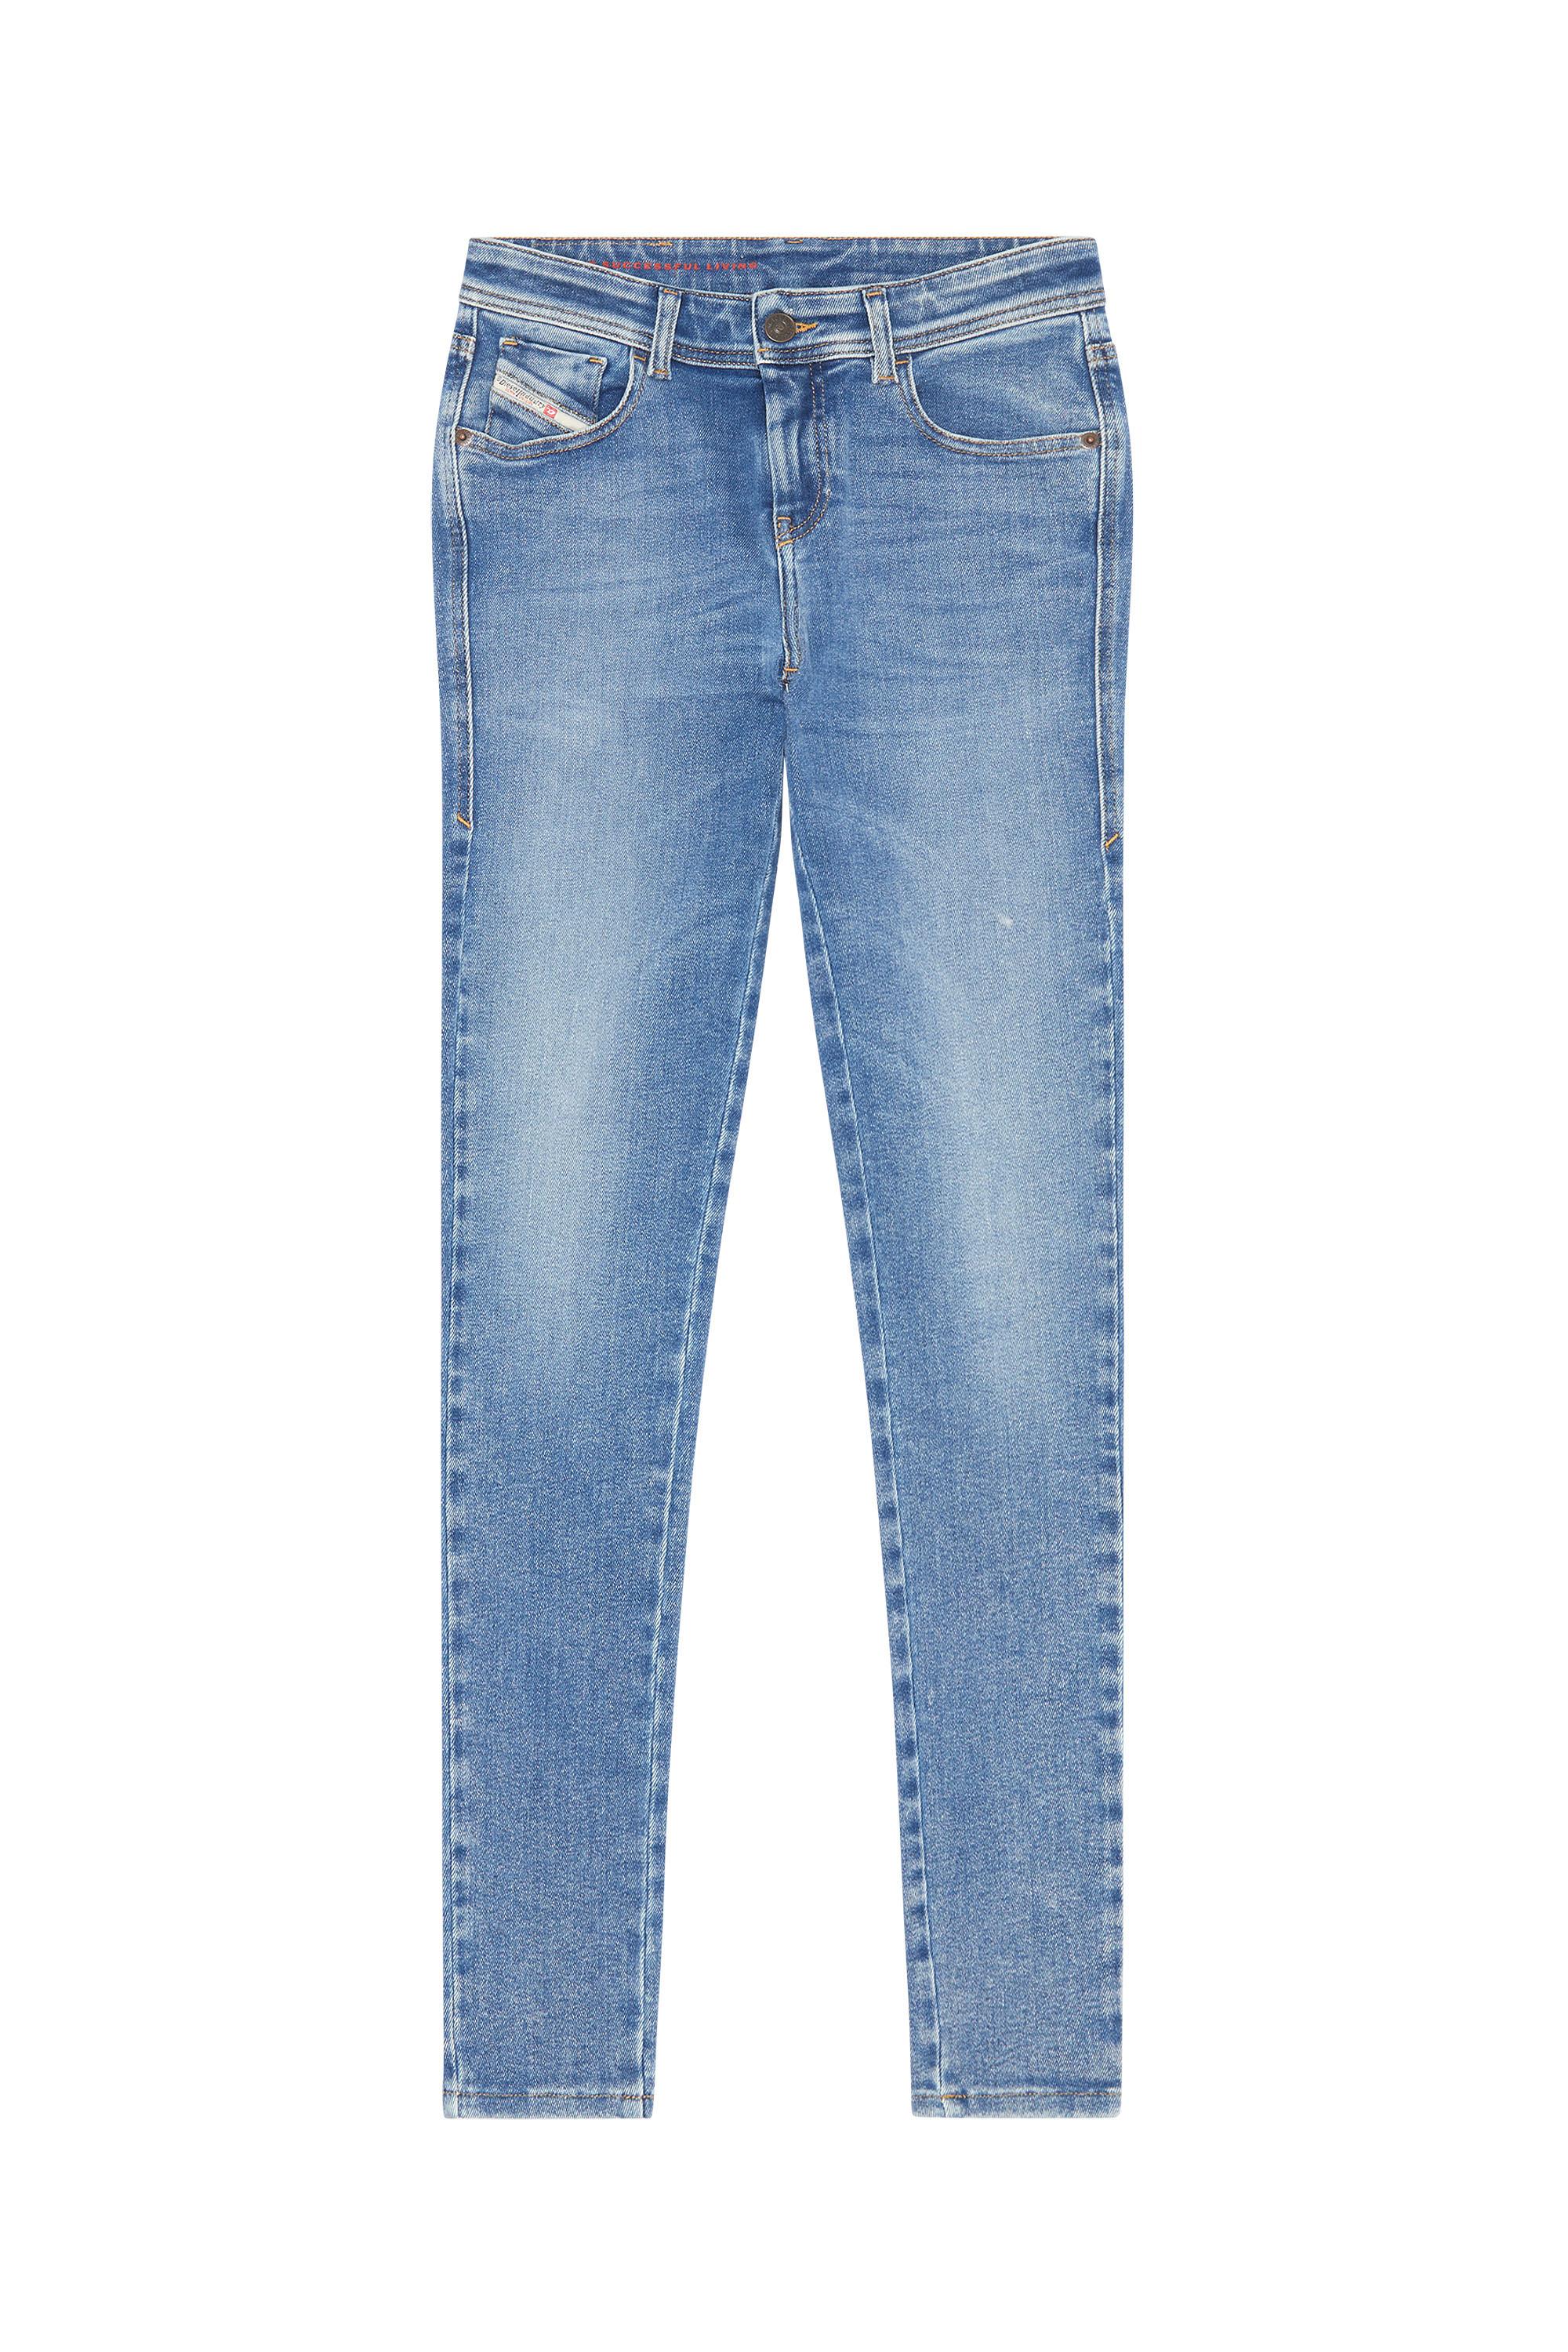 Diesel - Super skinny Jeans 2017 Slandy 09D62, Mujer Super skinny Jeans - 2017 Slandy in Azul marino - Image 3